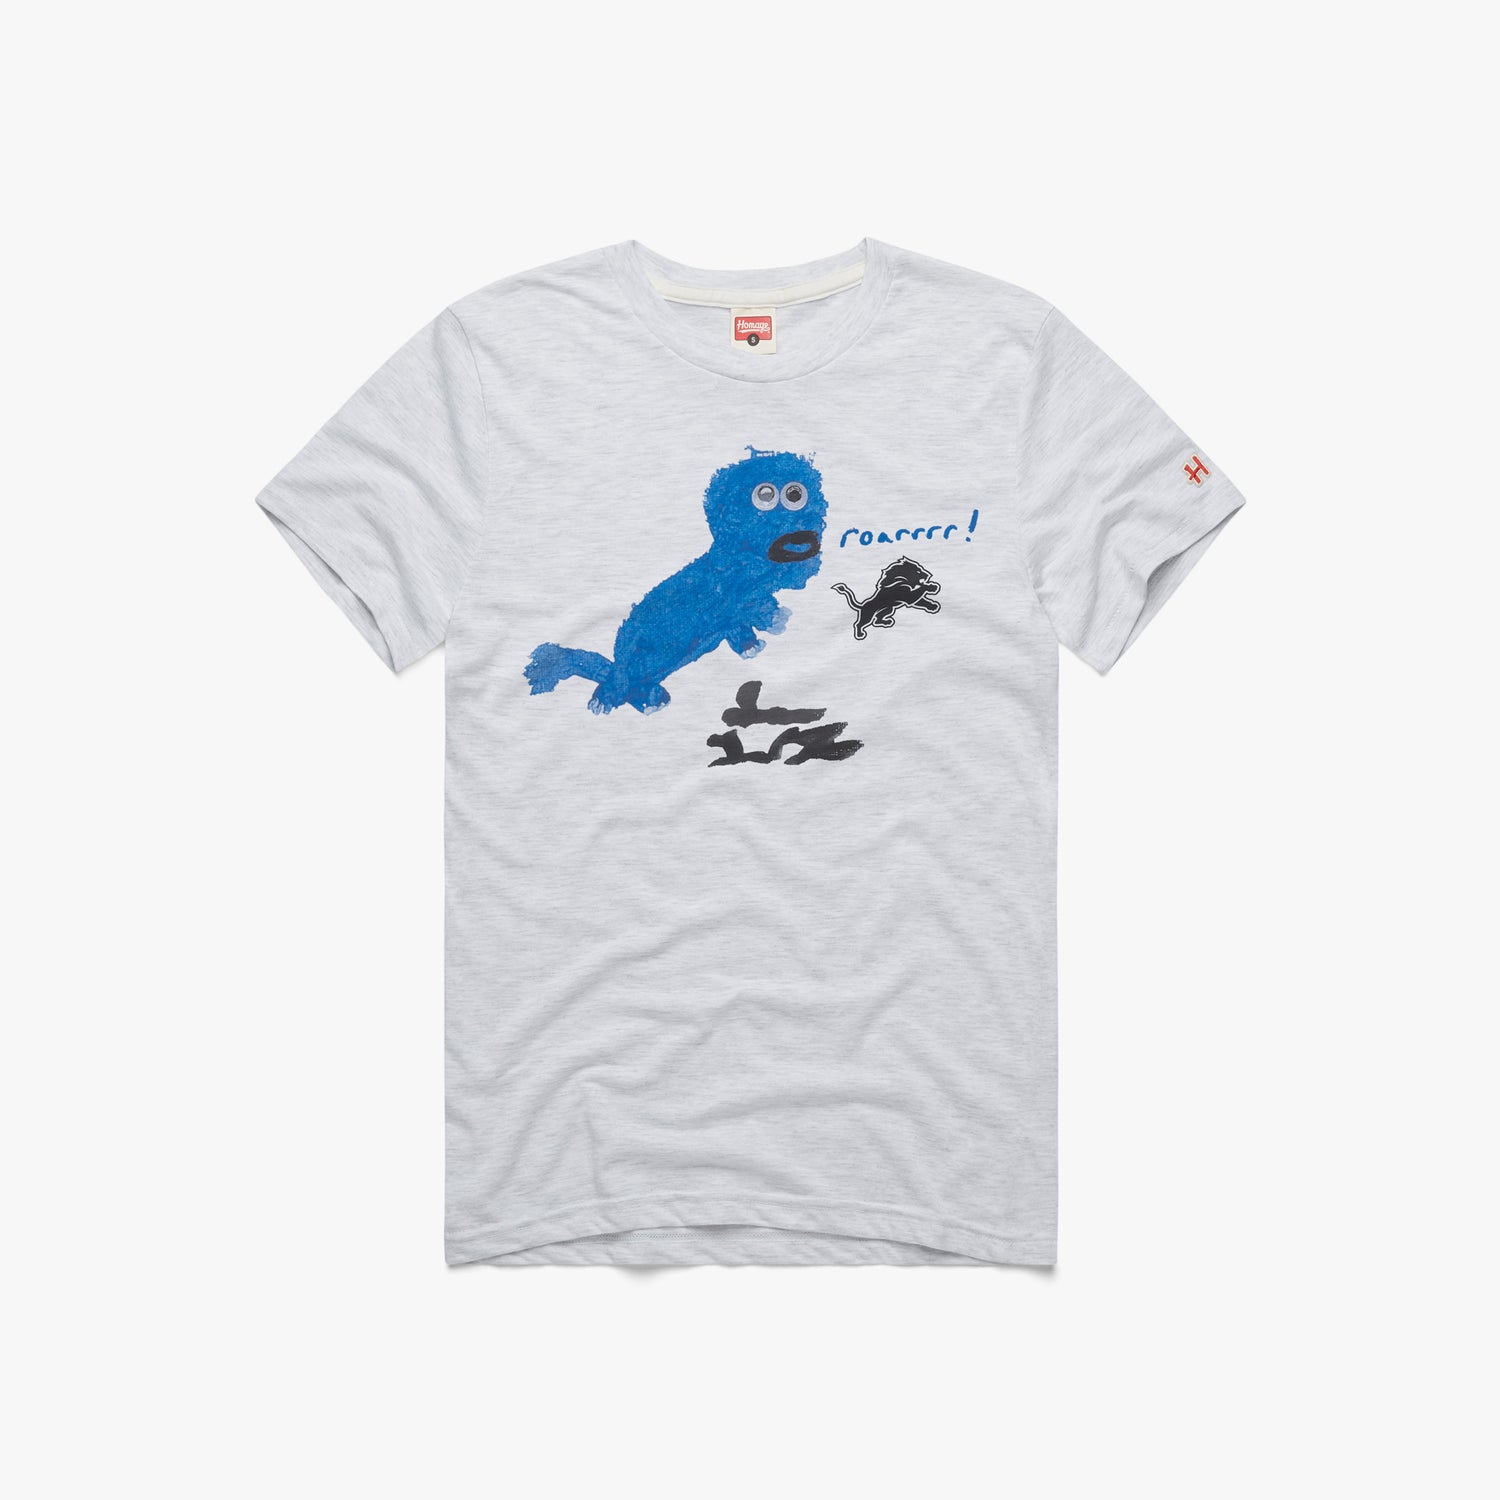 Ninja x Detroit Lions Limited Shirt, Custom prints store